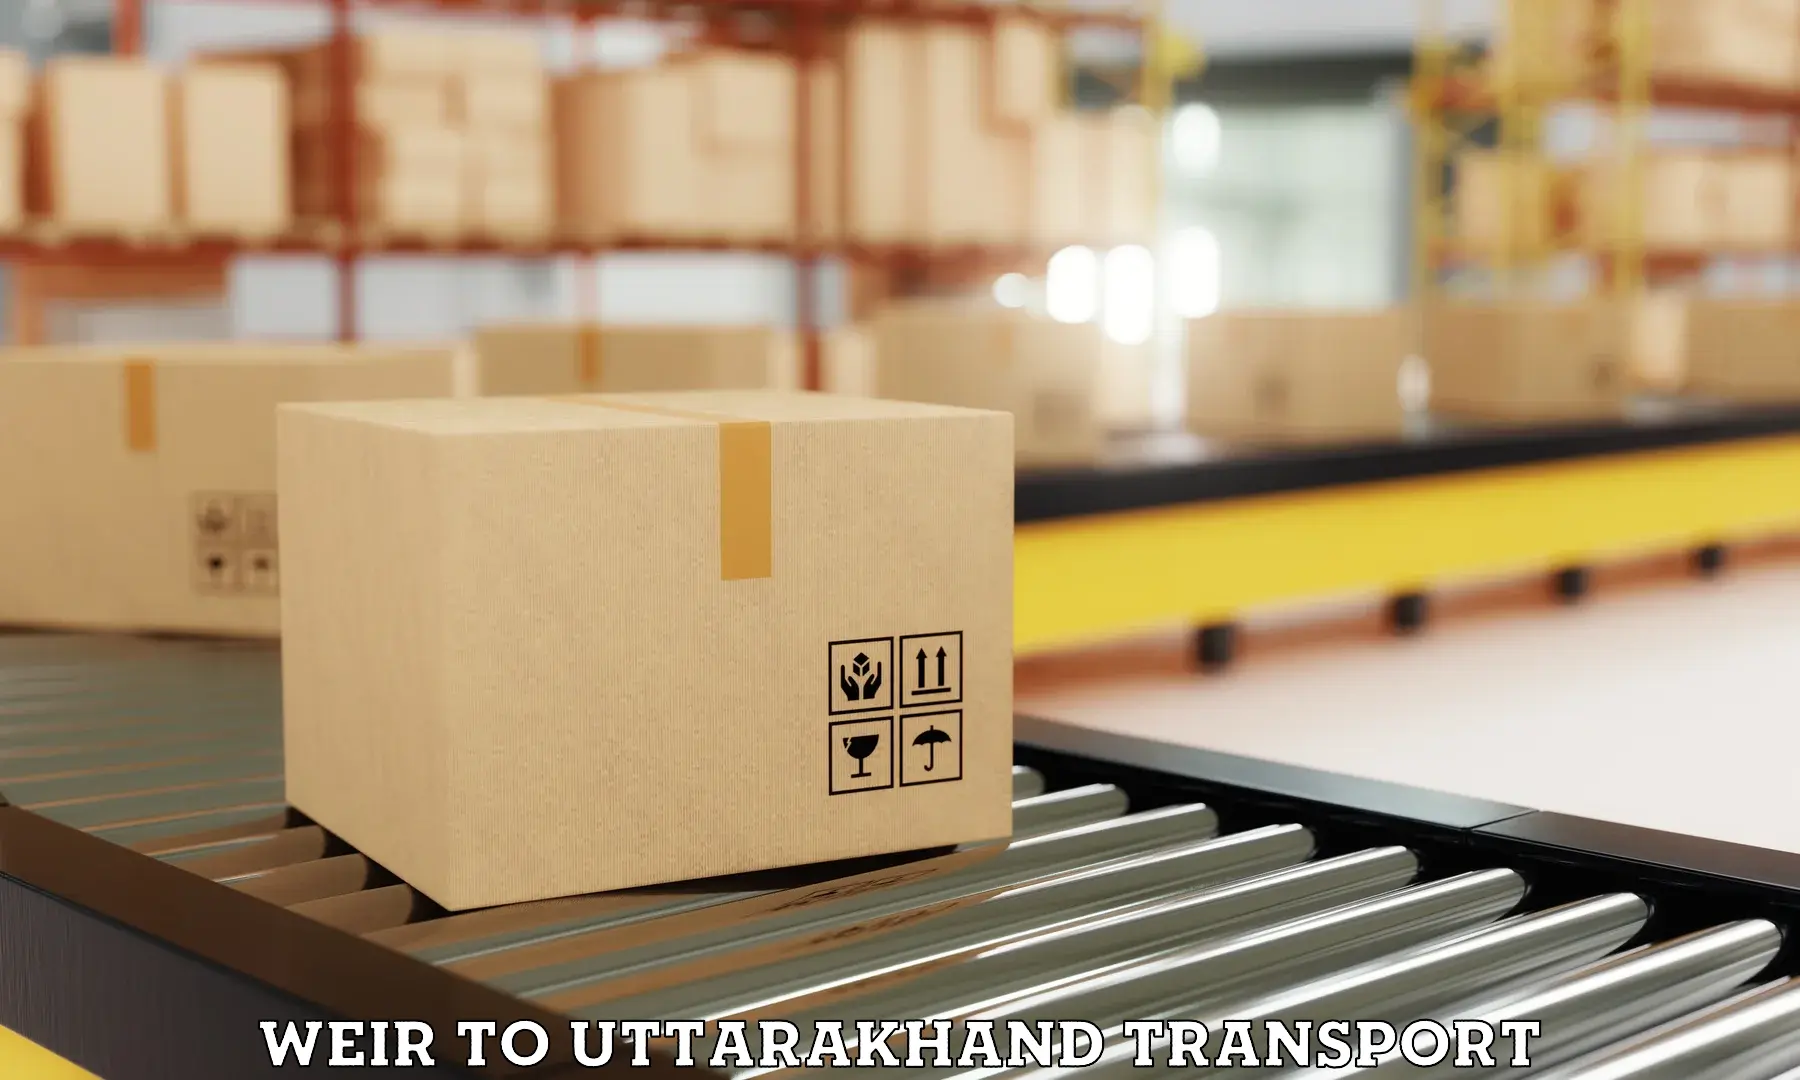 Furniture transport service Weir to Uttarakhand